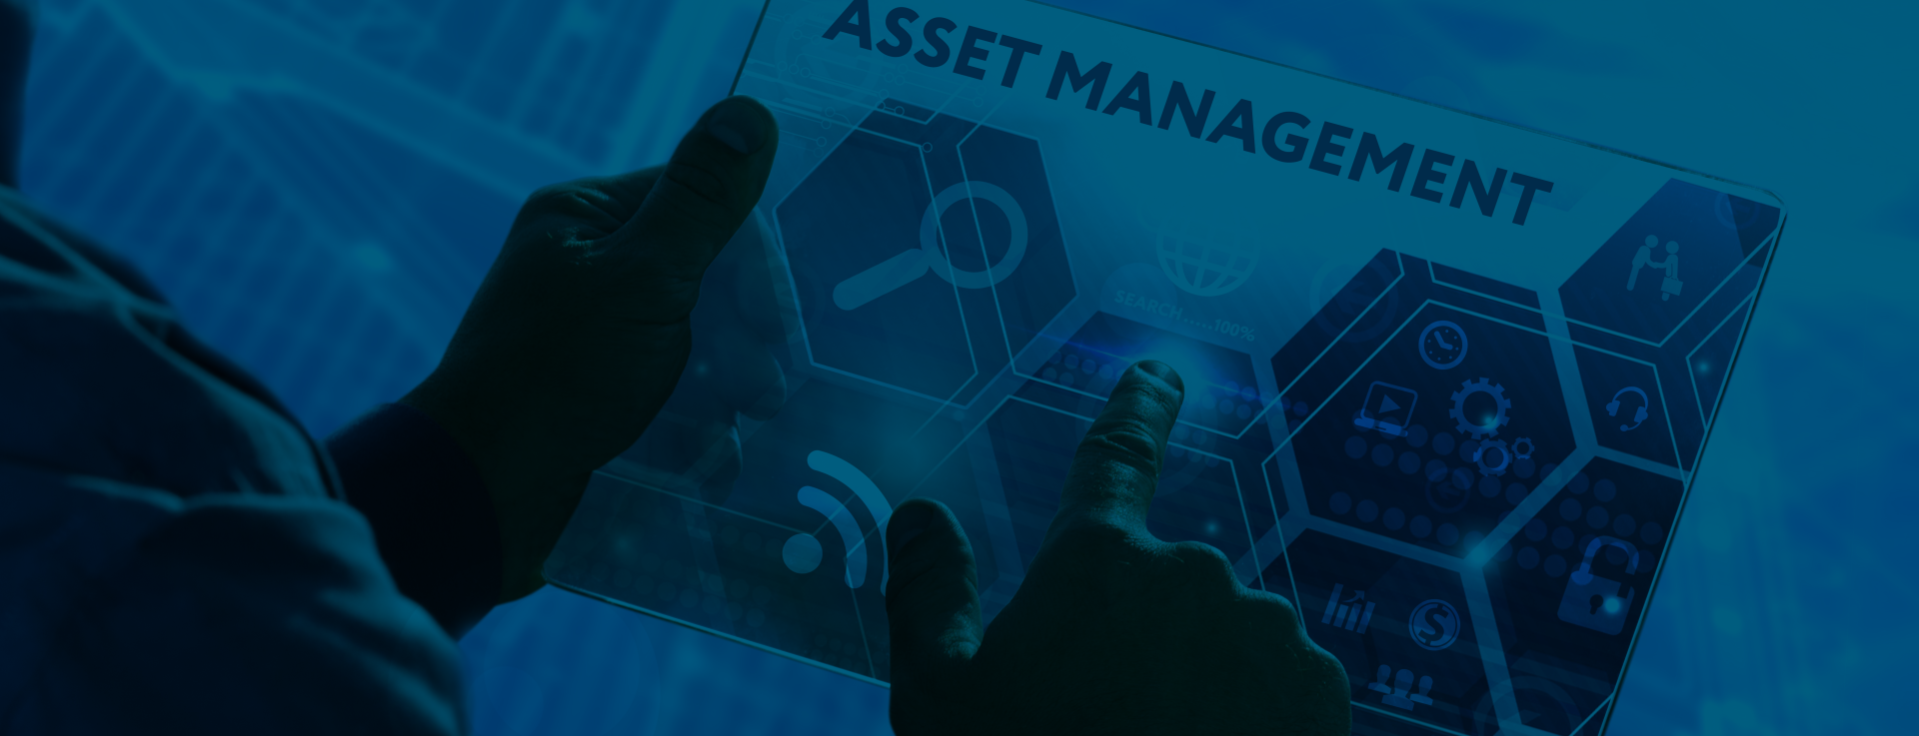 Asset Management Solutions